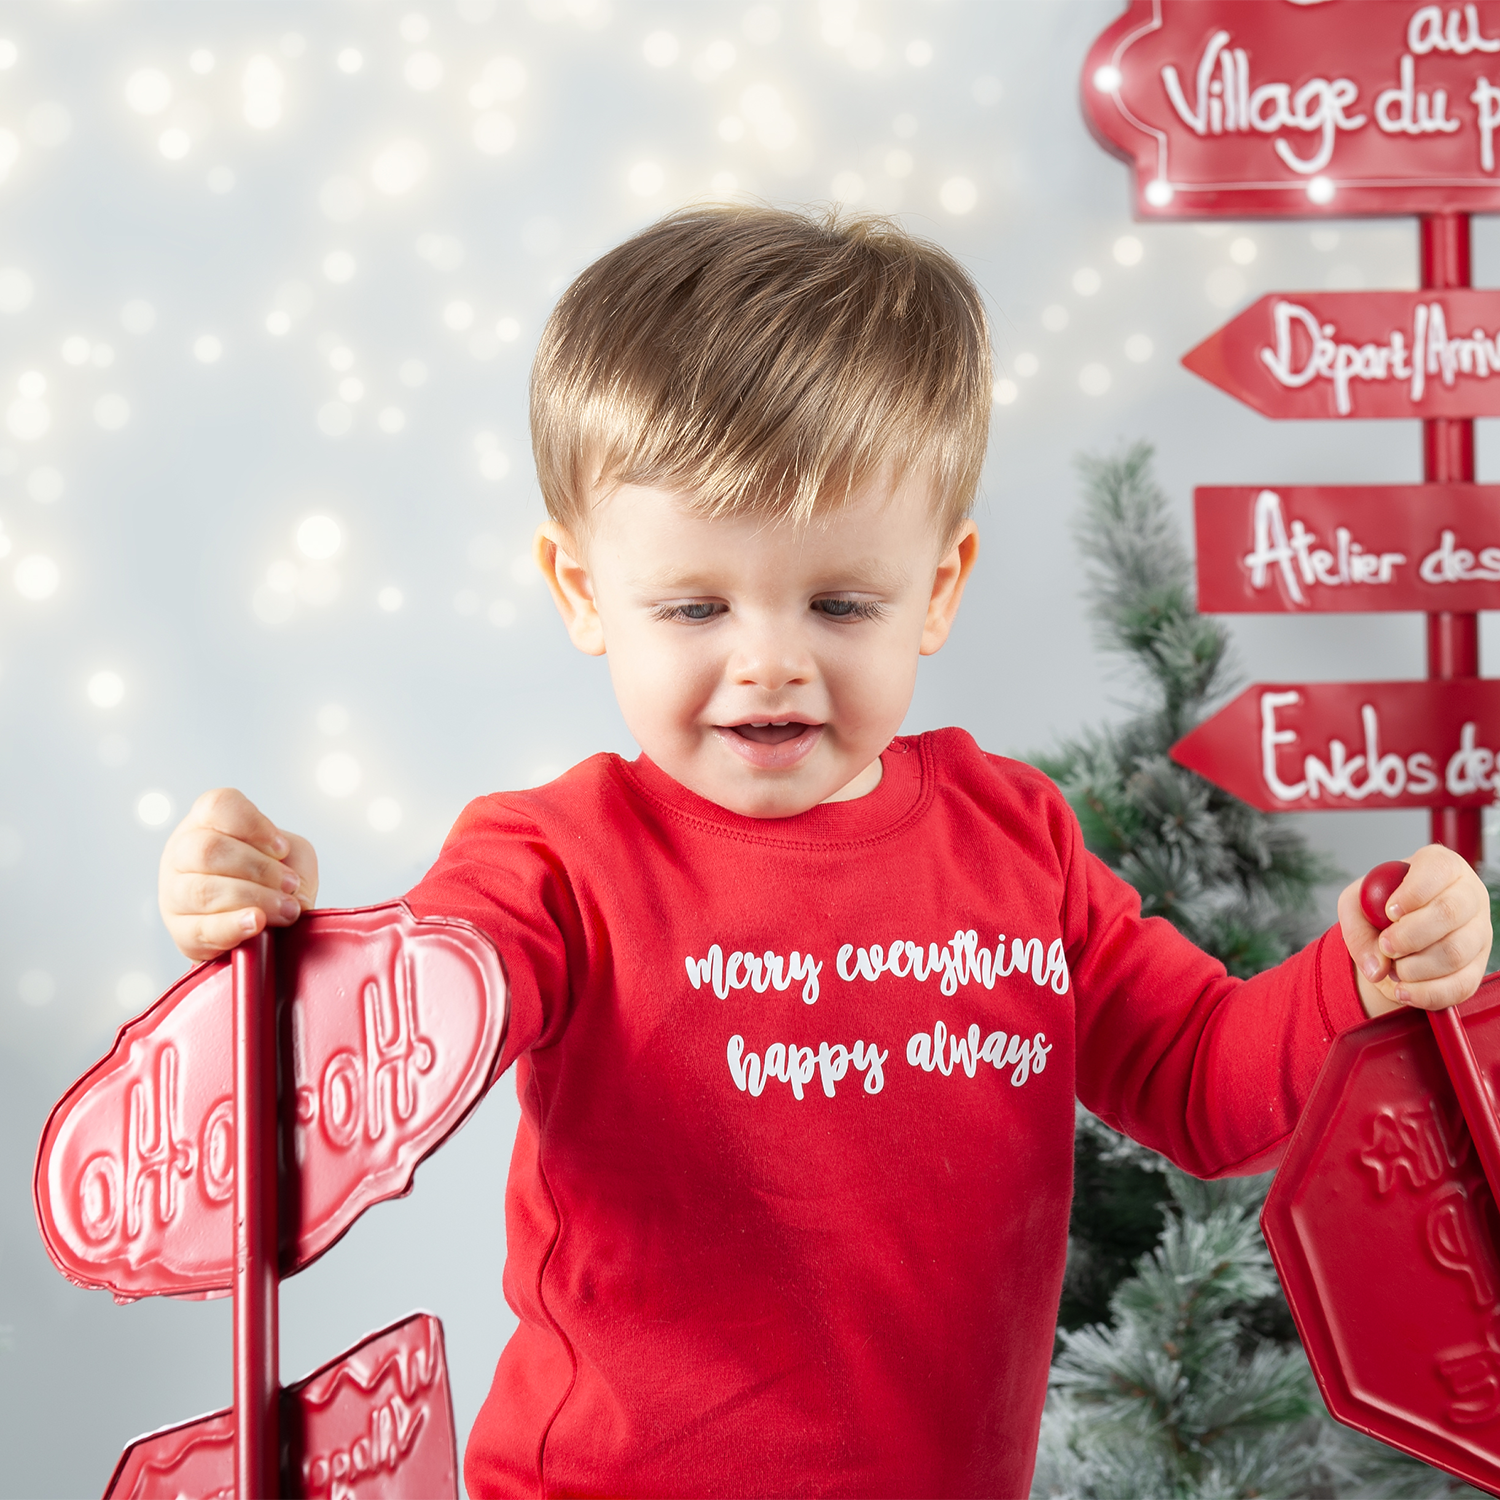 'Merry everything, Happy always' baby longsleeve shirt